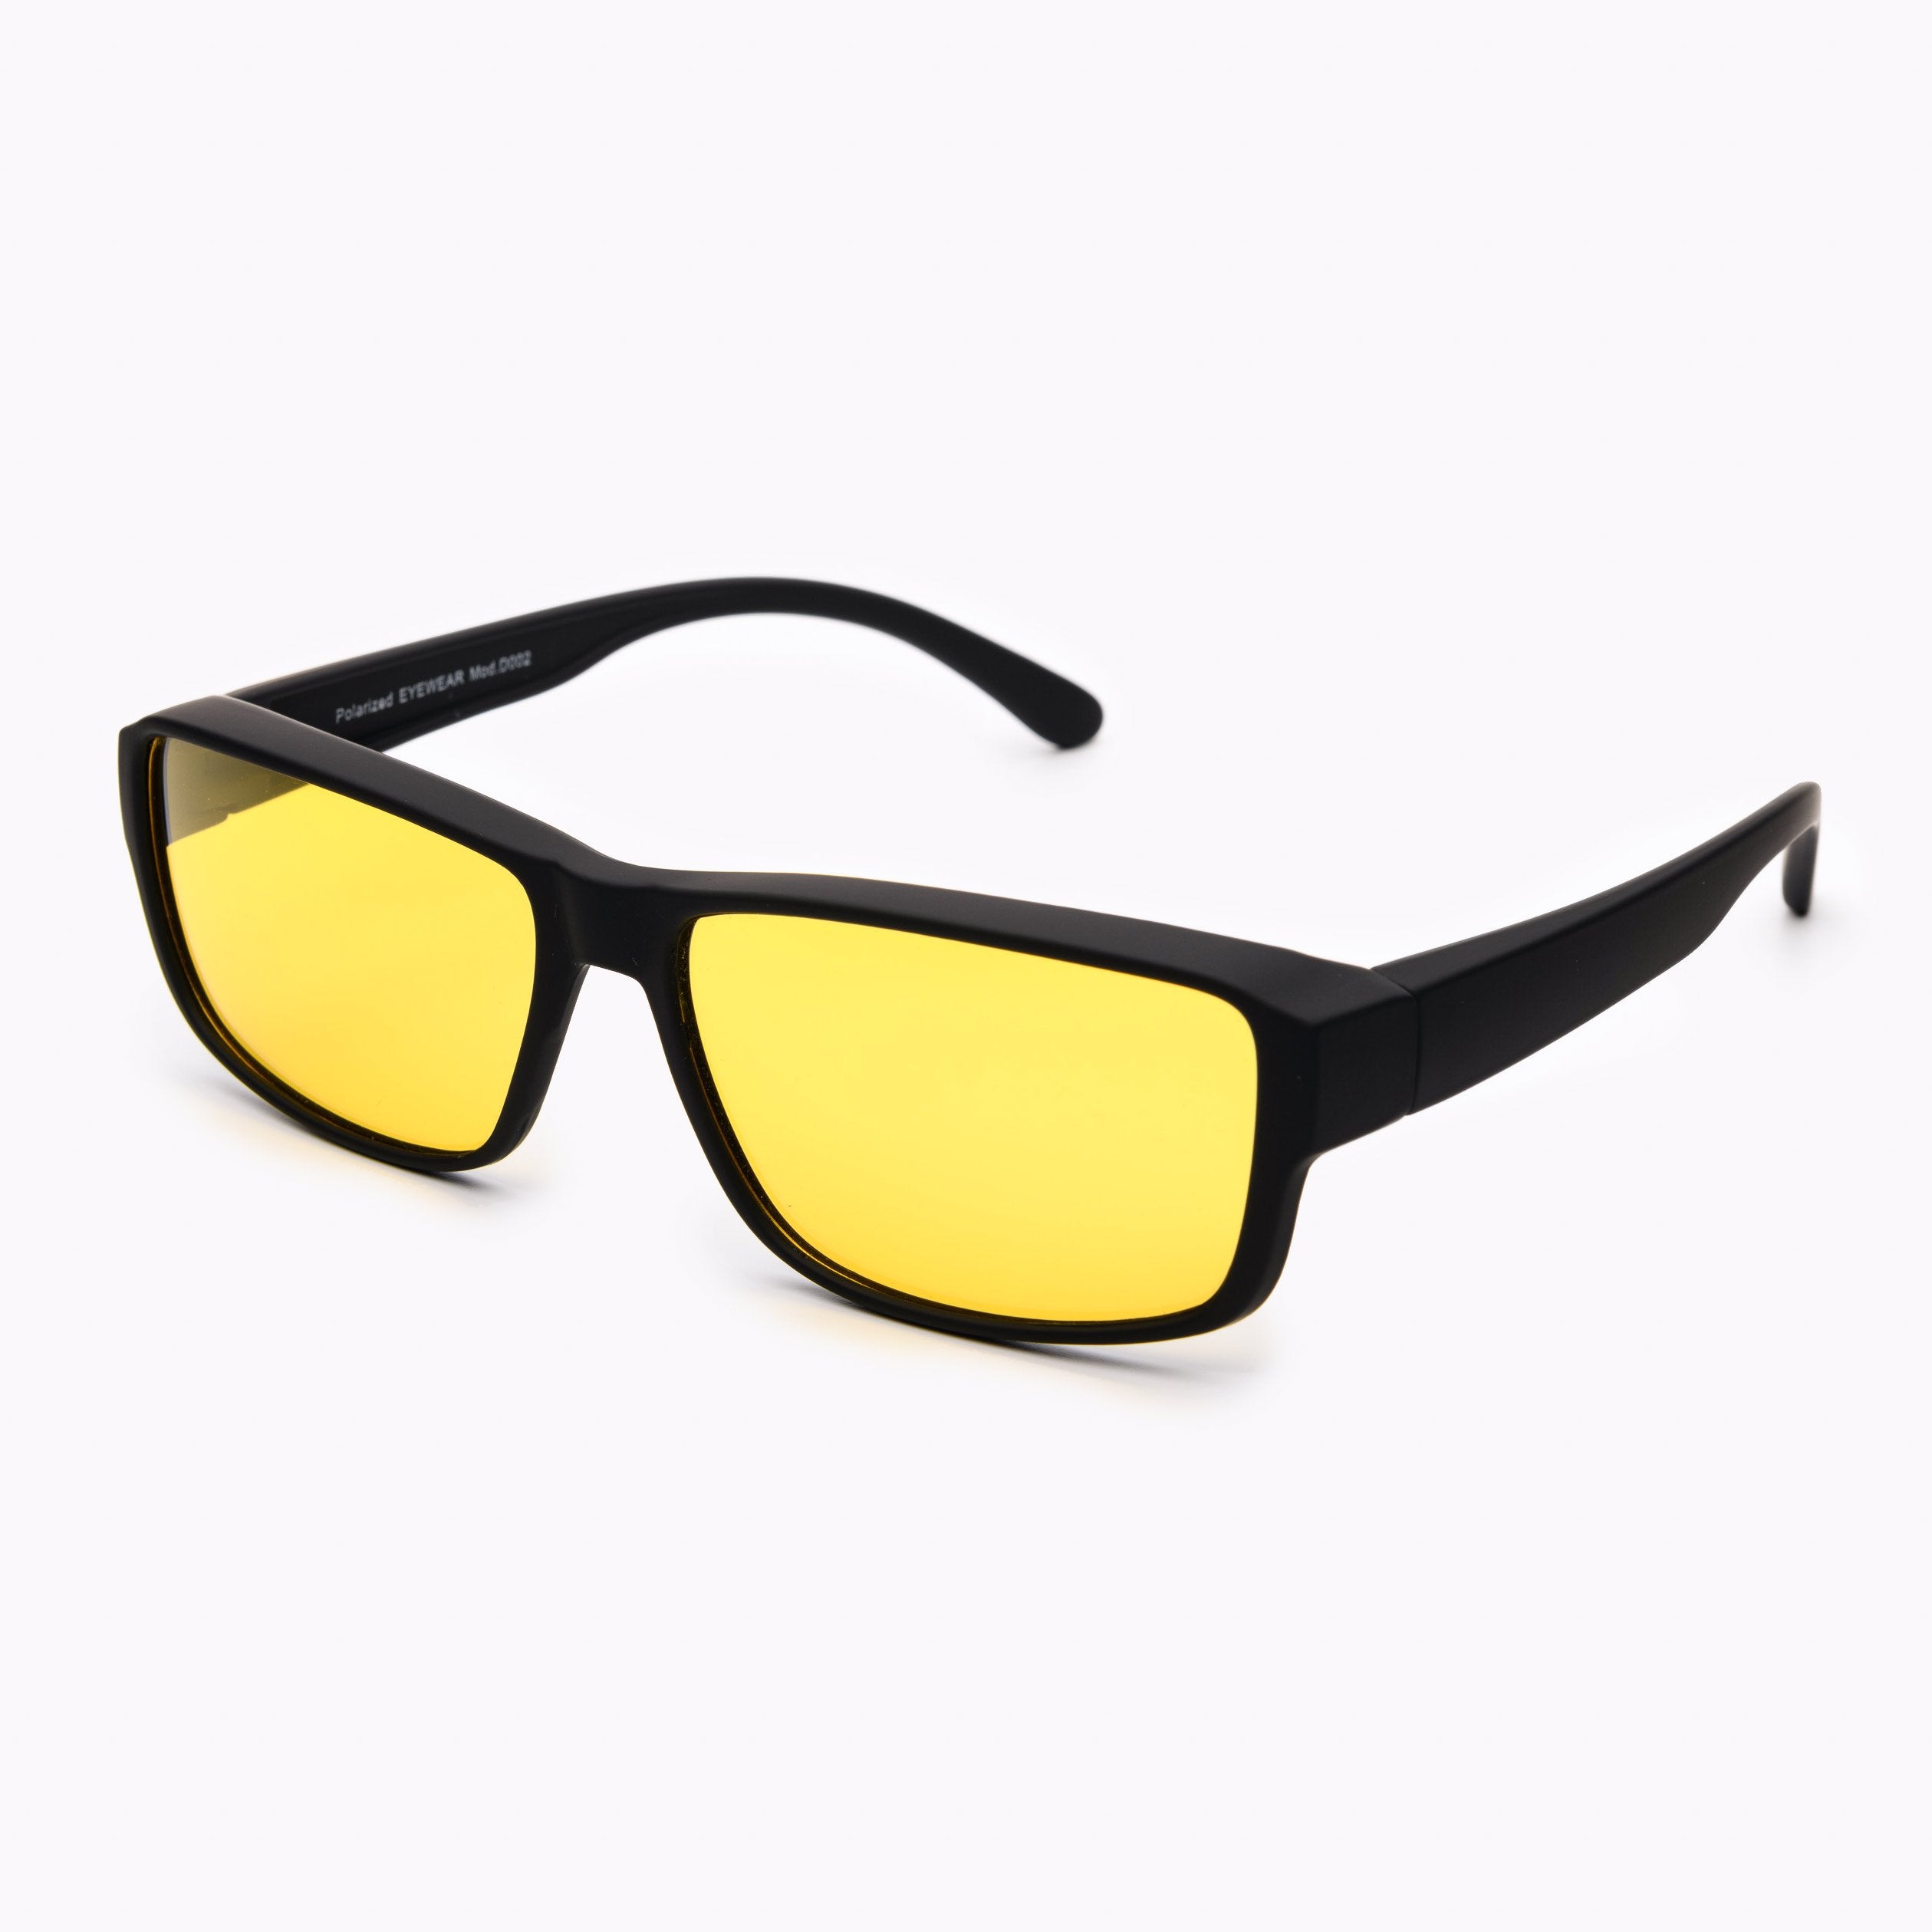 Black rectangle driving glasses